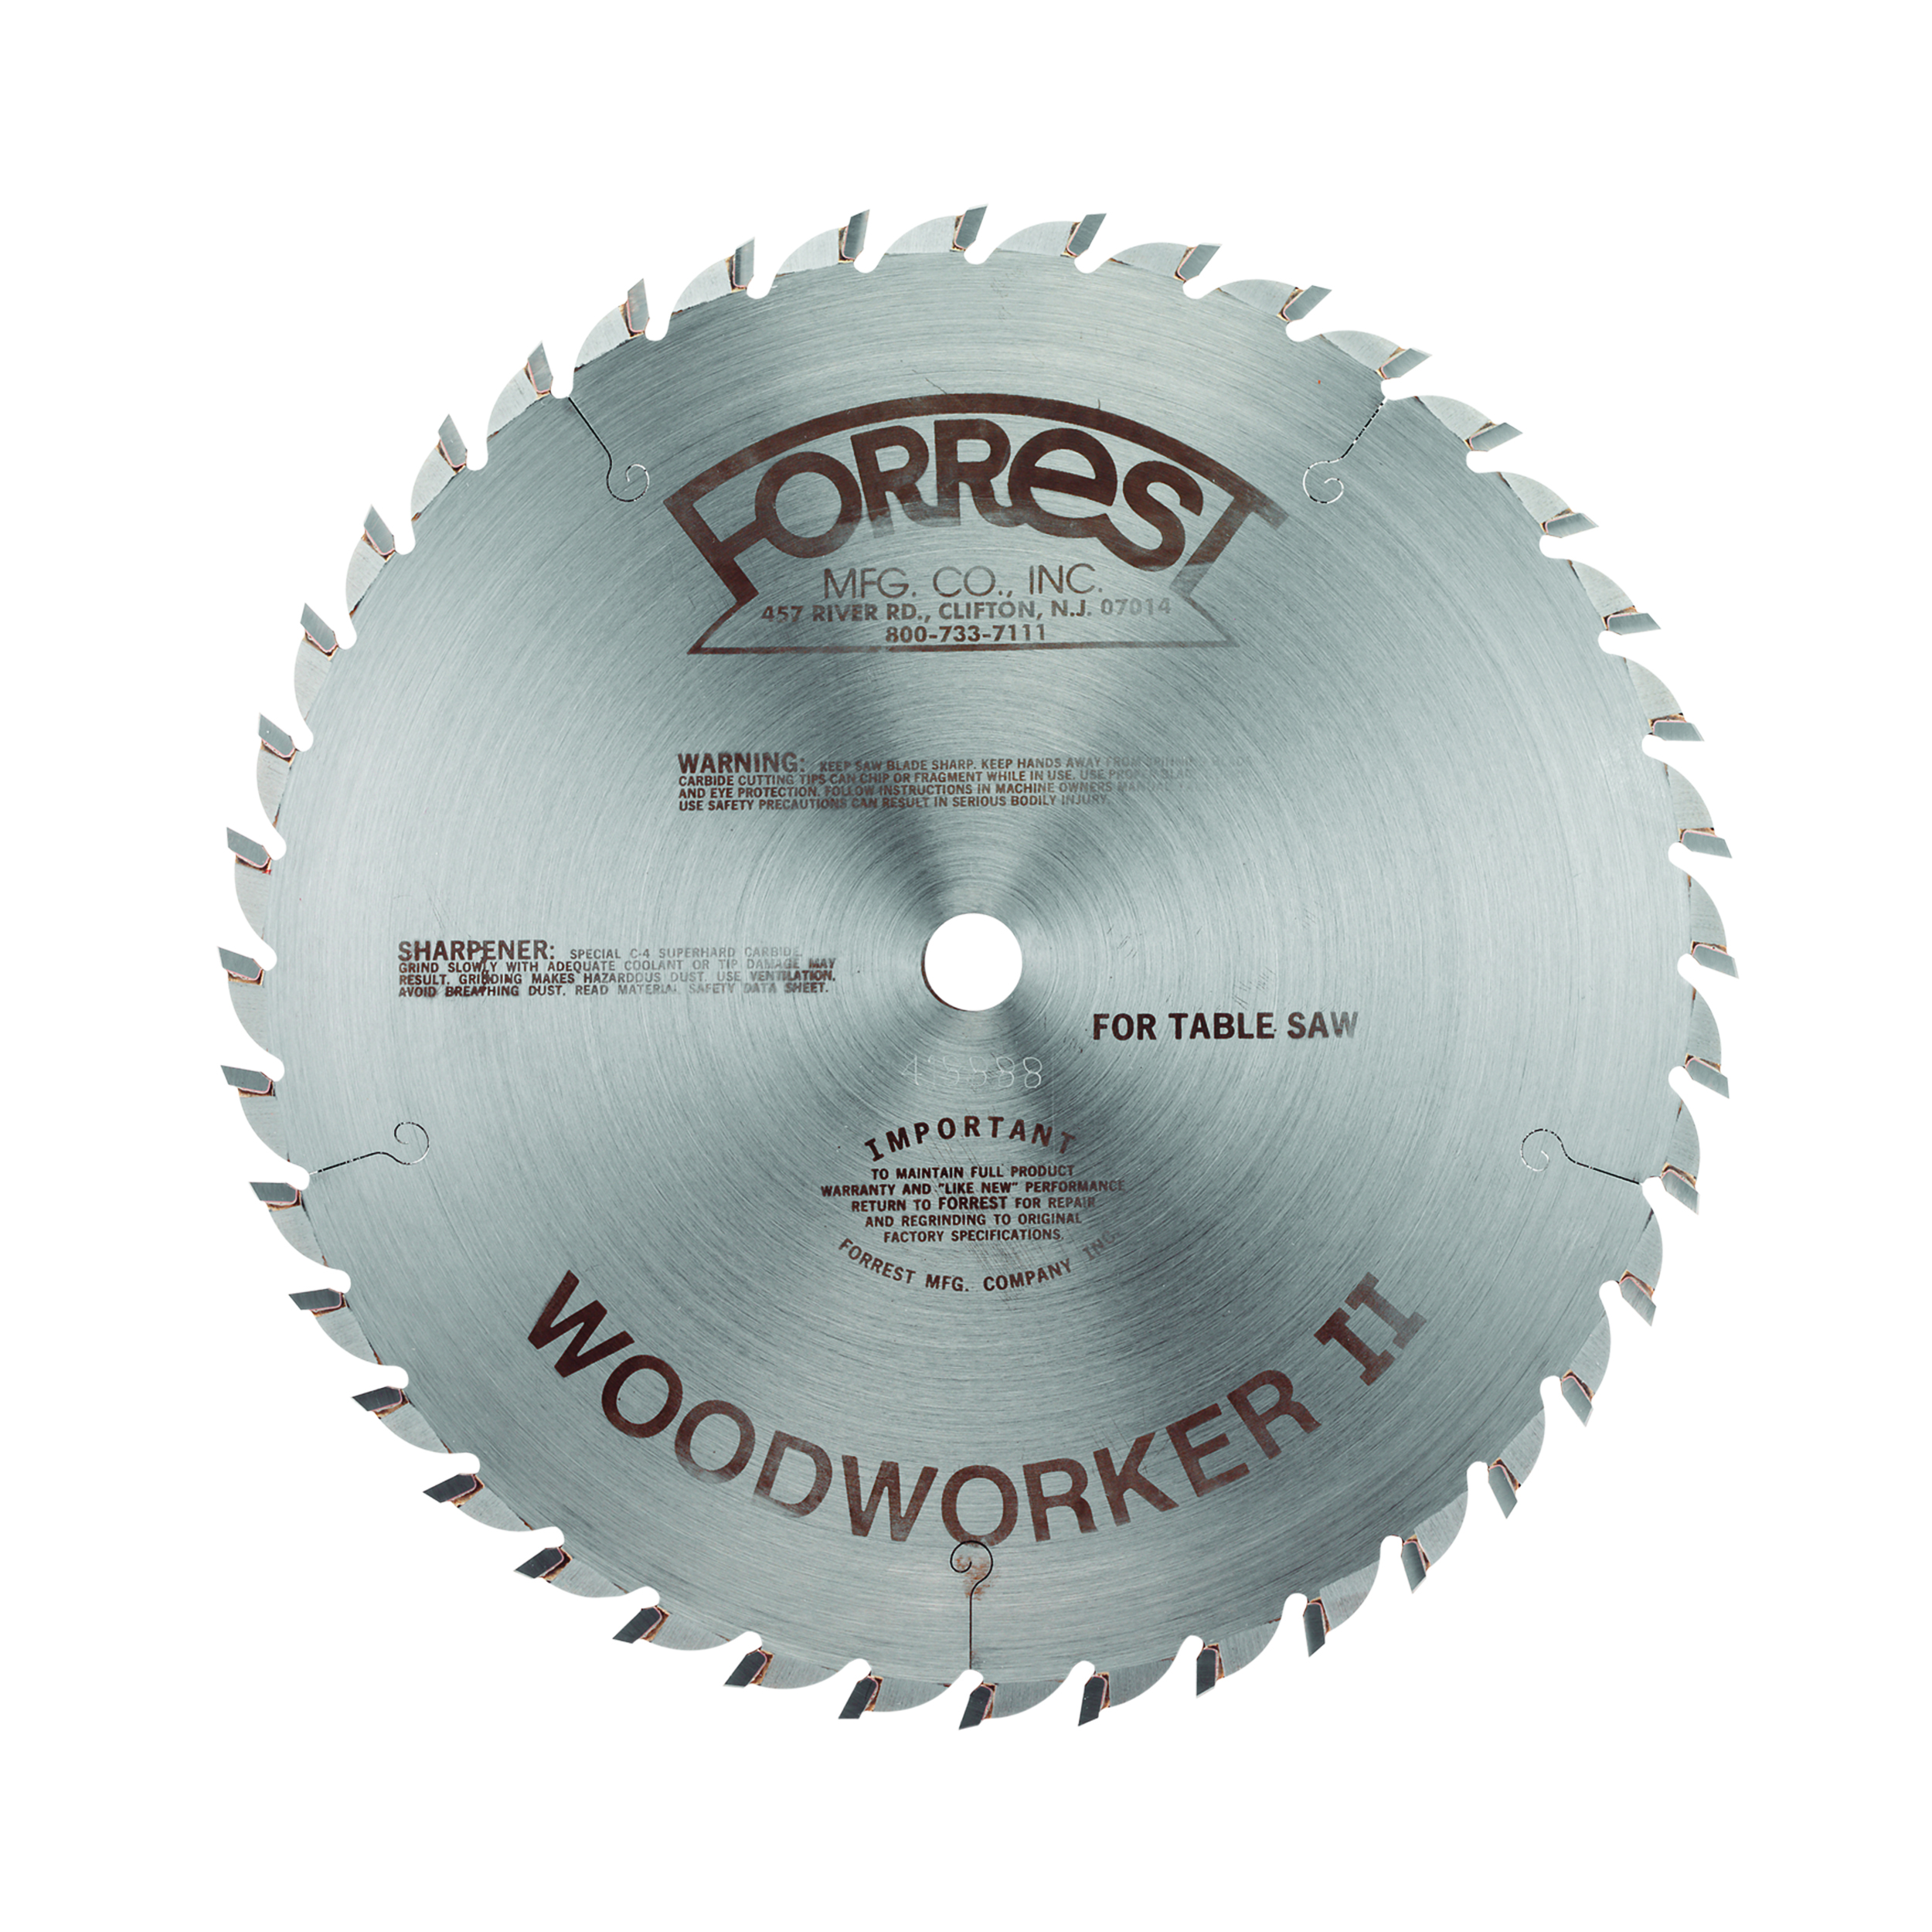 Ww10307125 Woodworker Ii Carbide Tipped Circular Saw Blade 10" X 30 Tooth